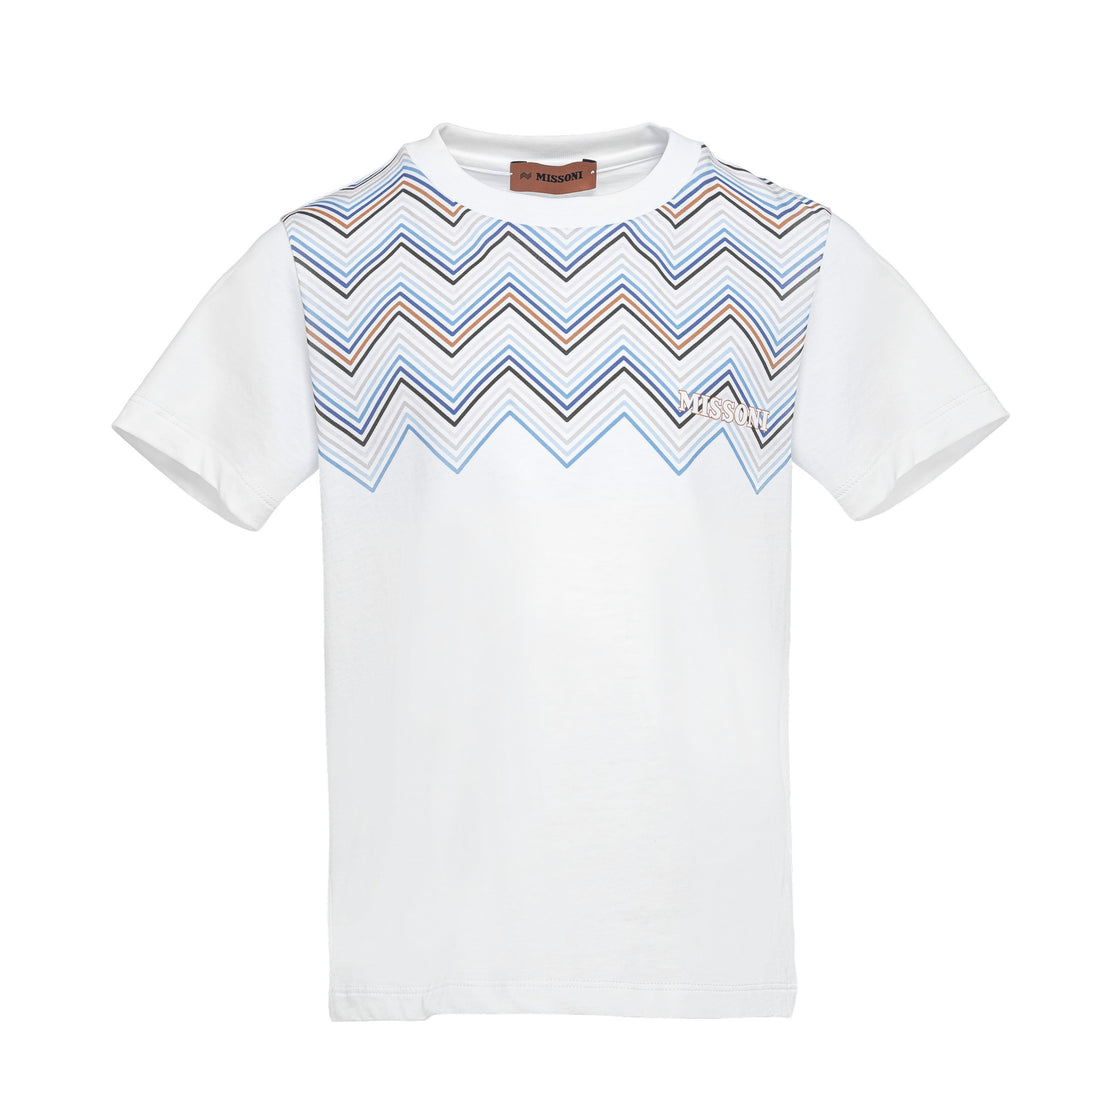 Missoni T-Shirt/Top Style: Ms8P51100